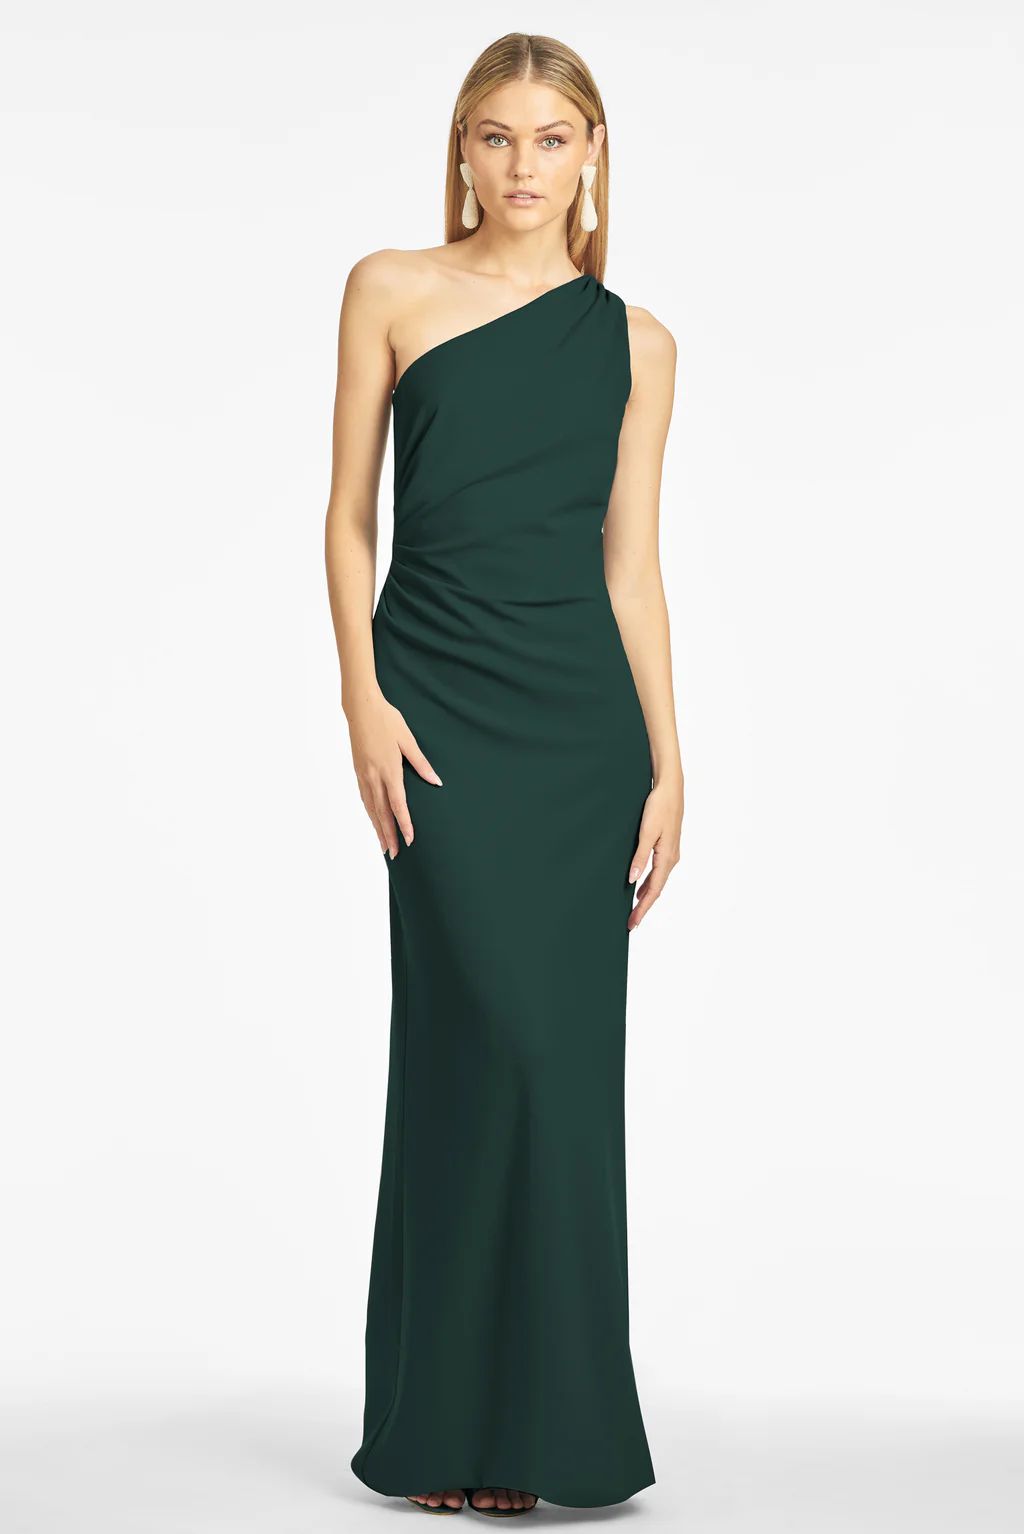 Cece 4-Way Stretch Crepe Gown - Emerald | Sachin & Babi